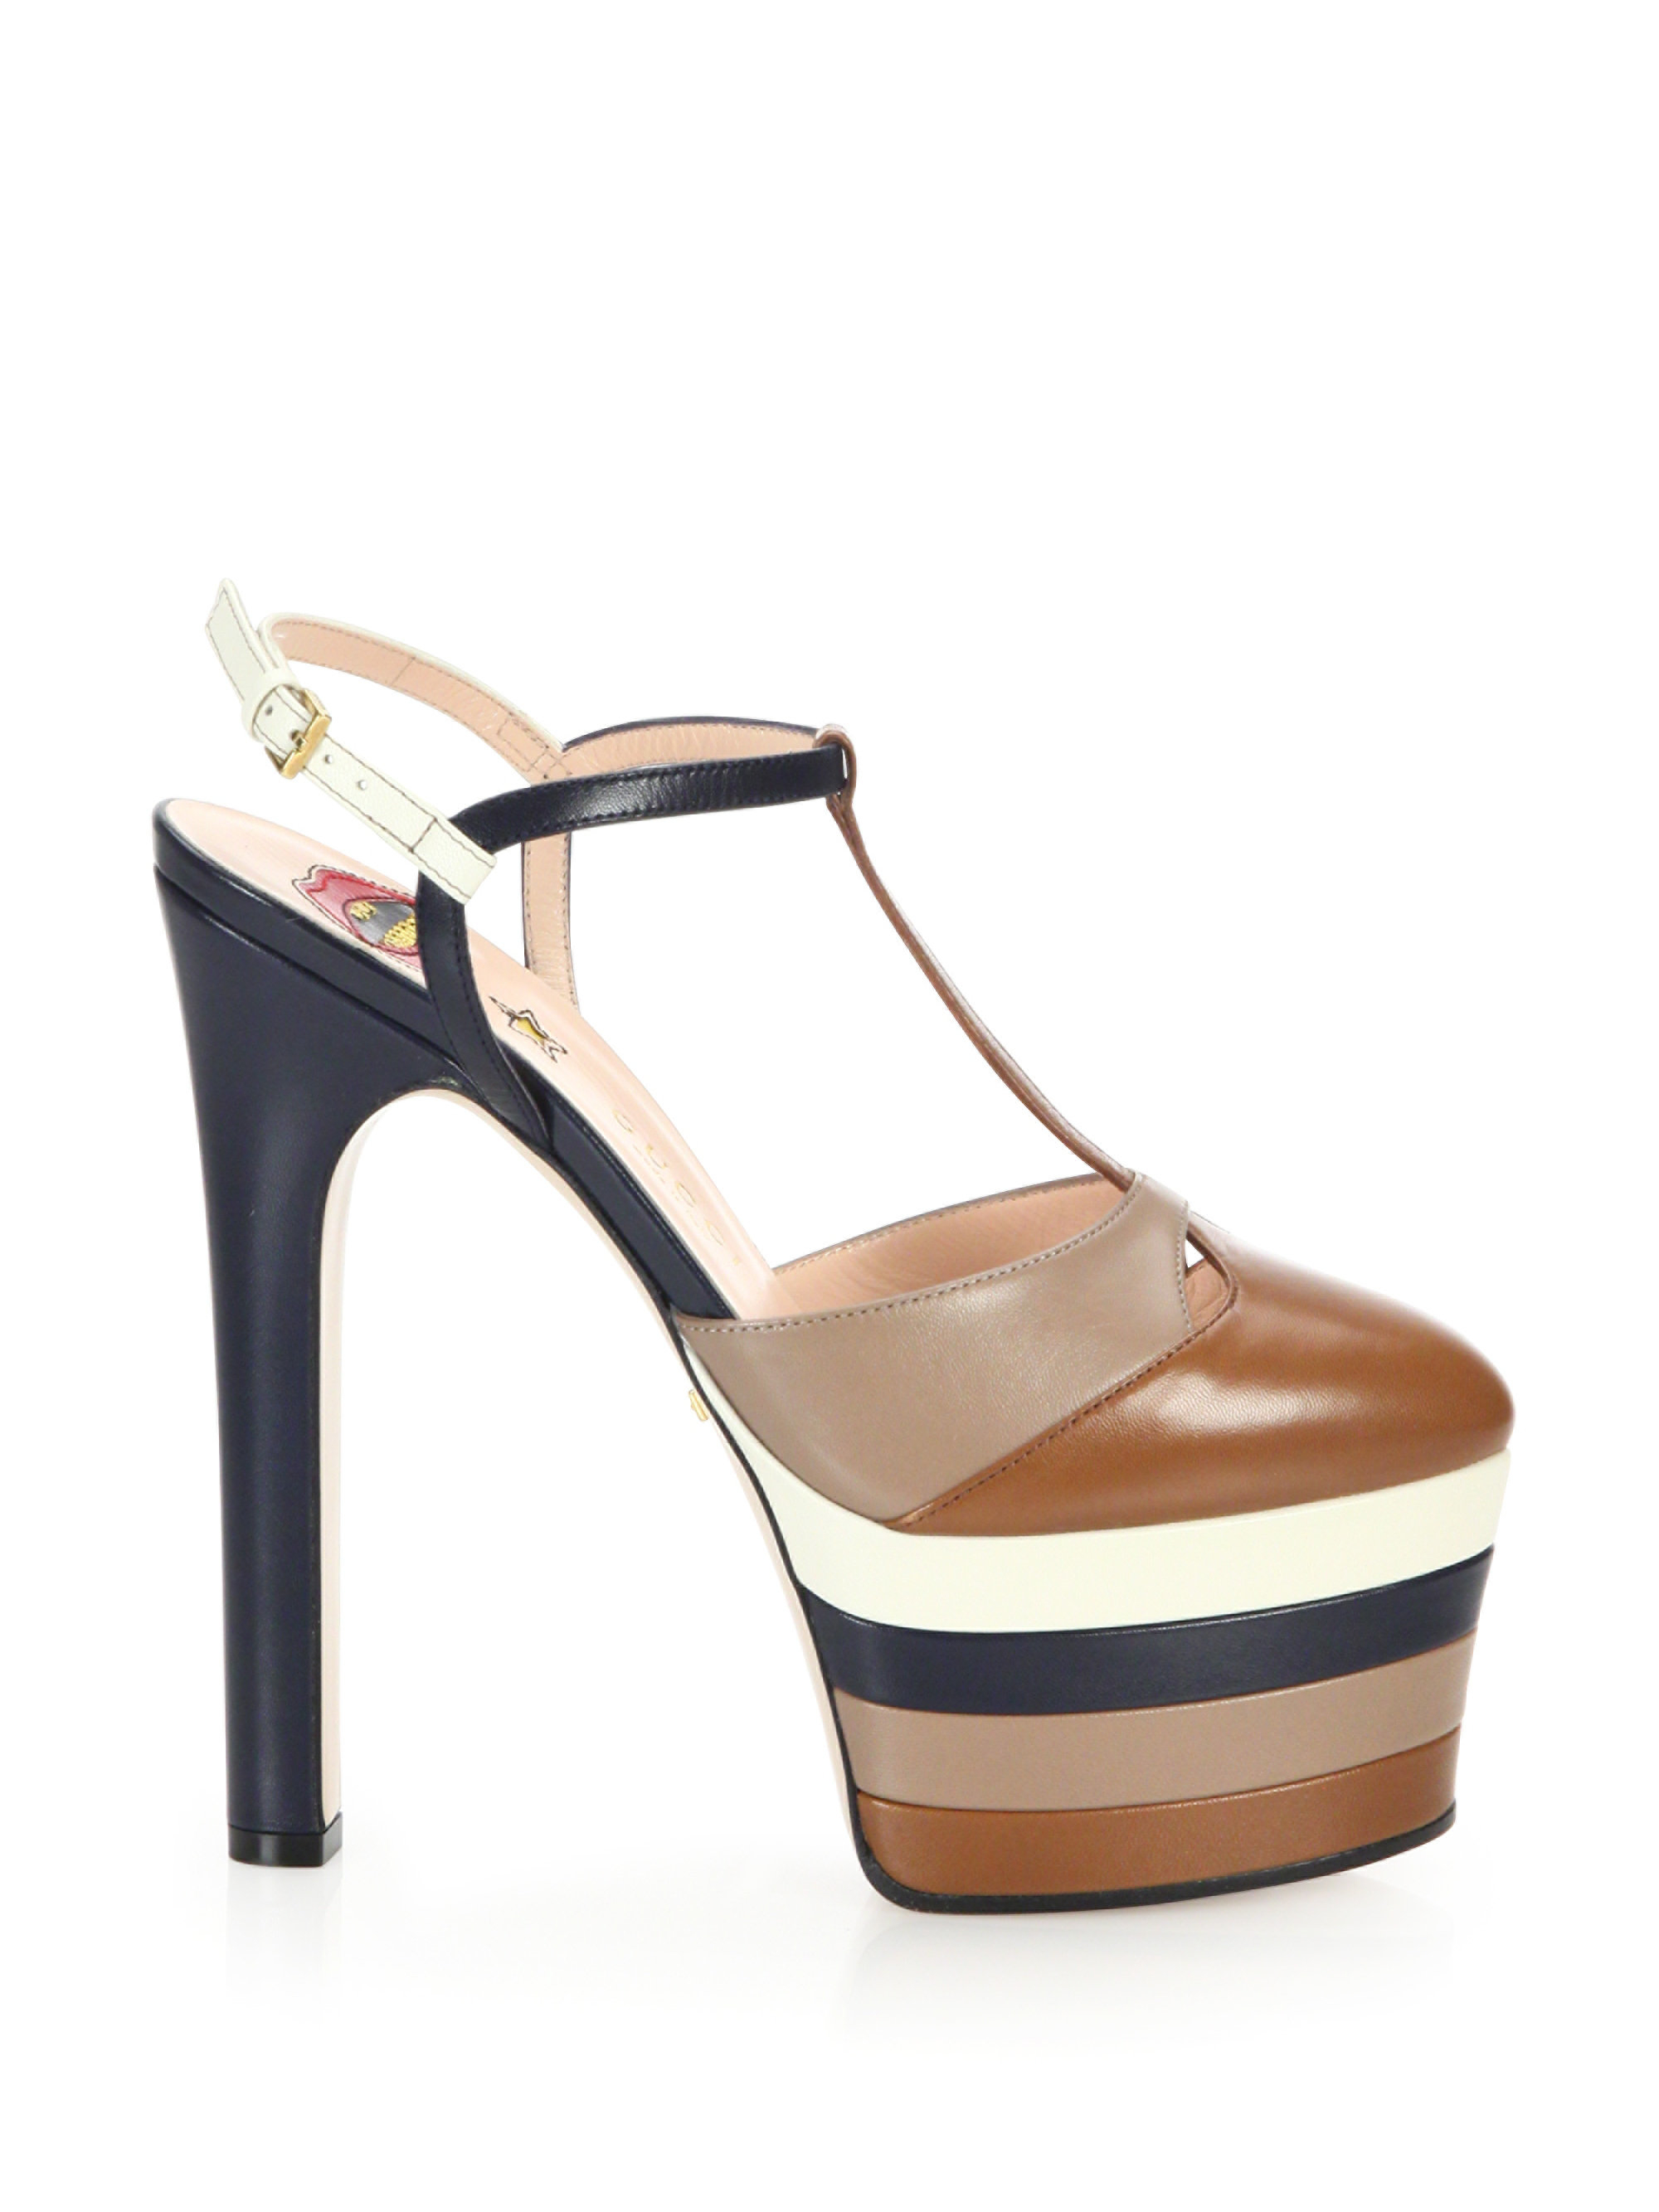 gucci platform sandals sale, OFF 76%,Buy!